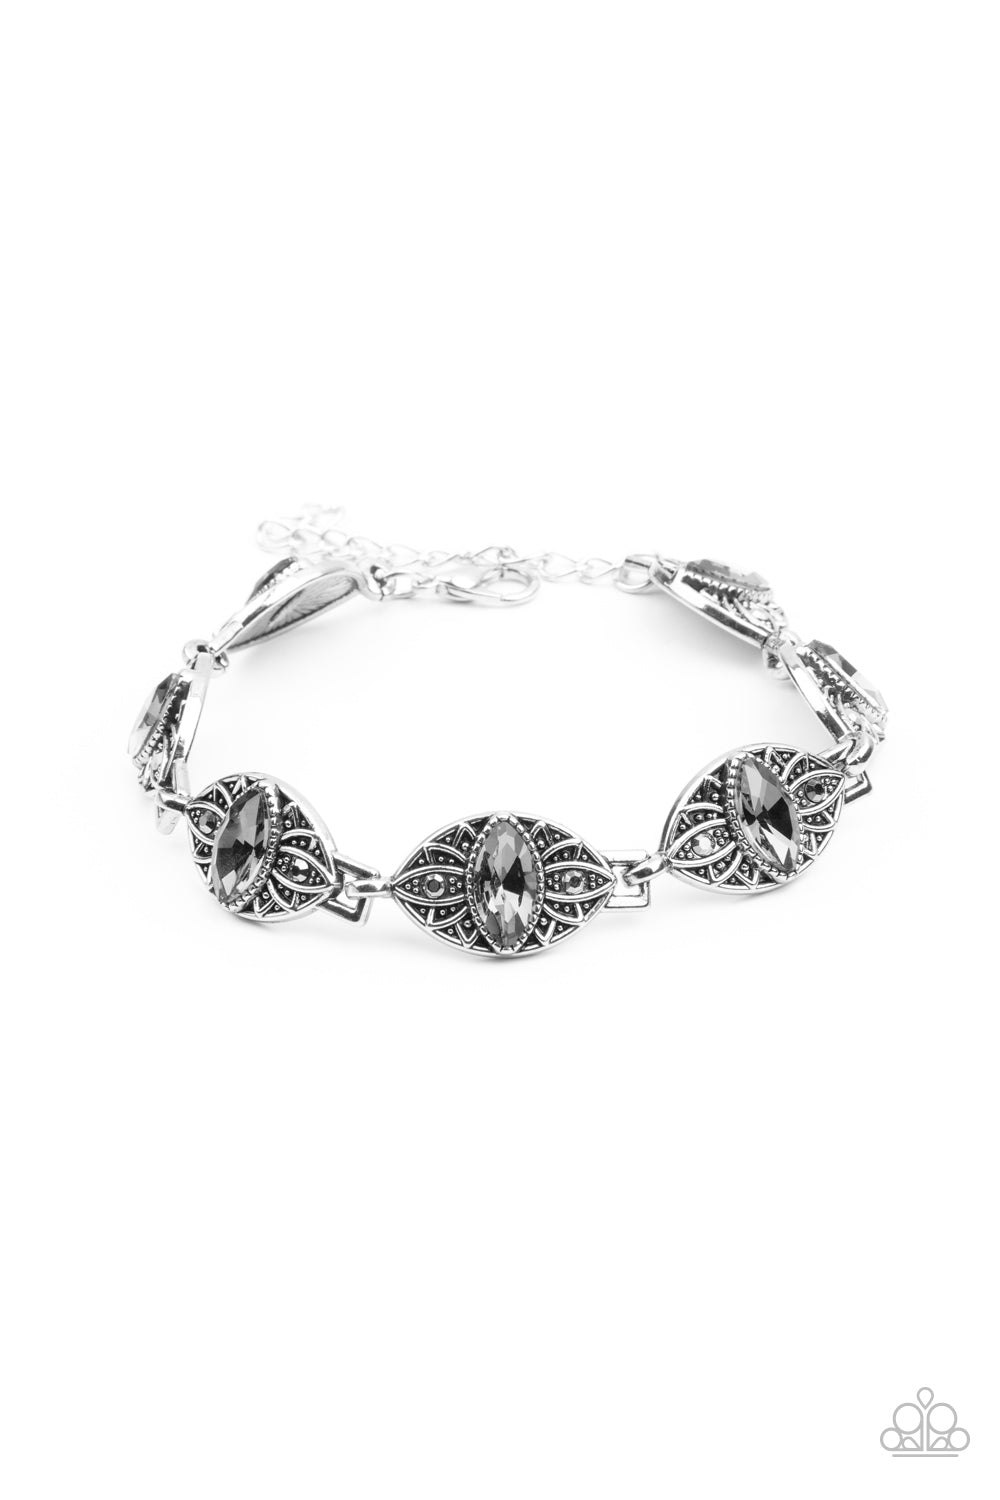 Crown Privilege - Silver Bracelet freeshipping - JewLz4u Gemstone Gallery